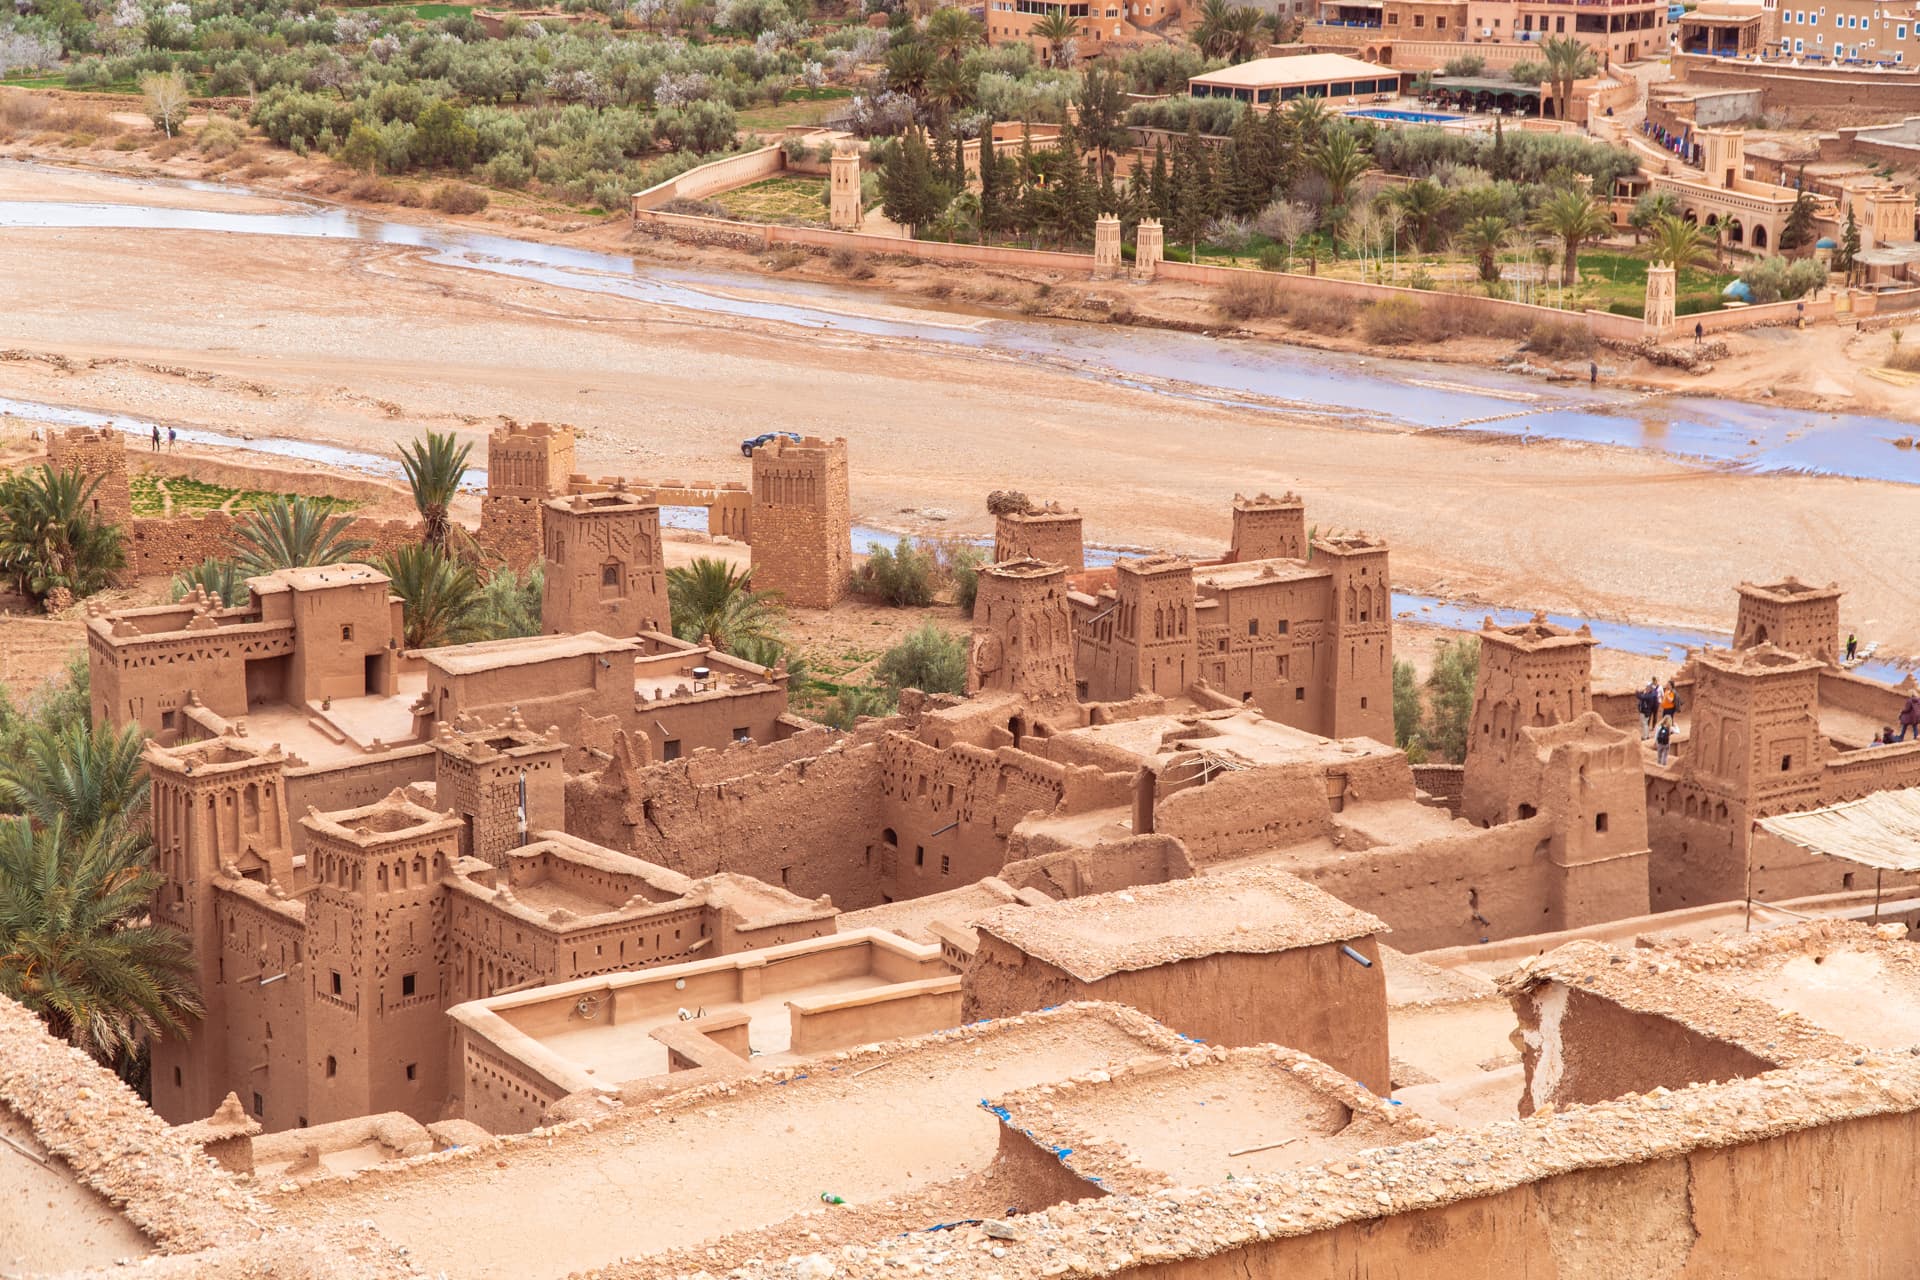 Ait Ben Haddou | Plan wyjazdu do Maroko